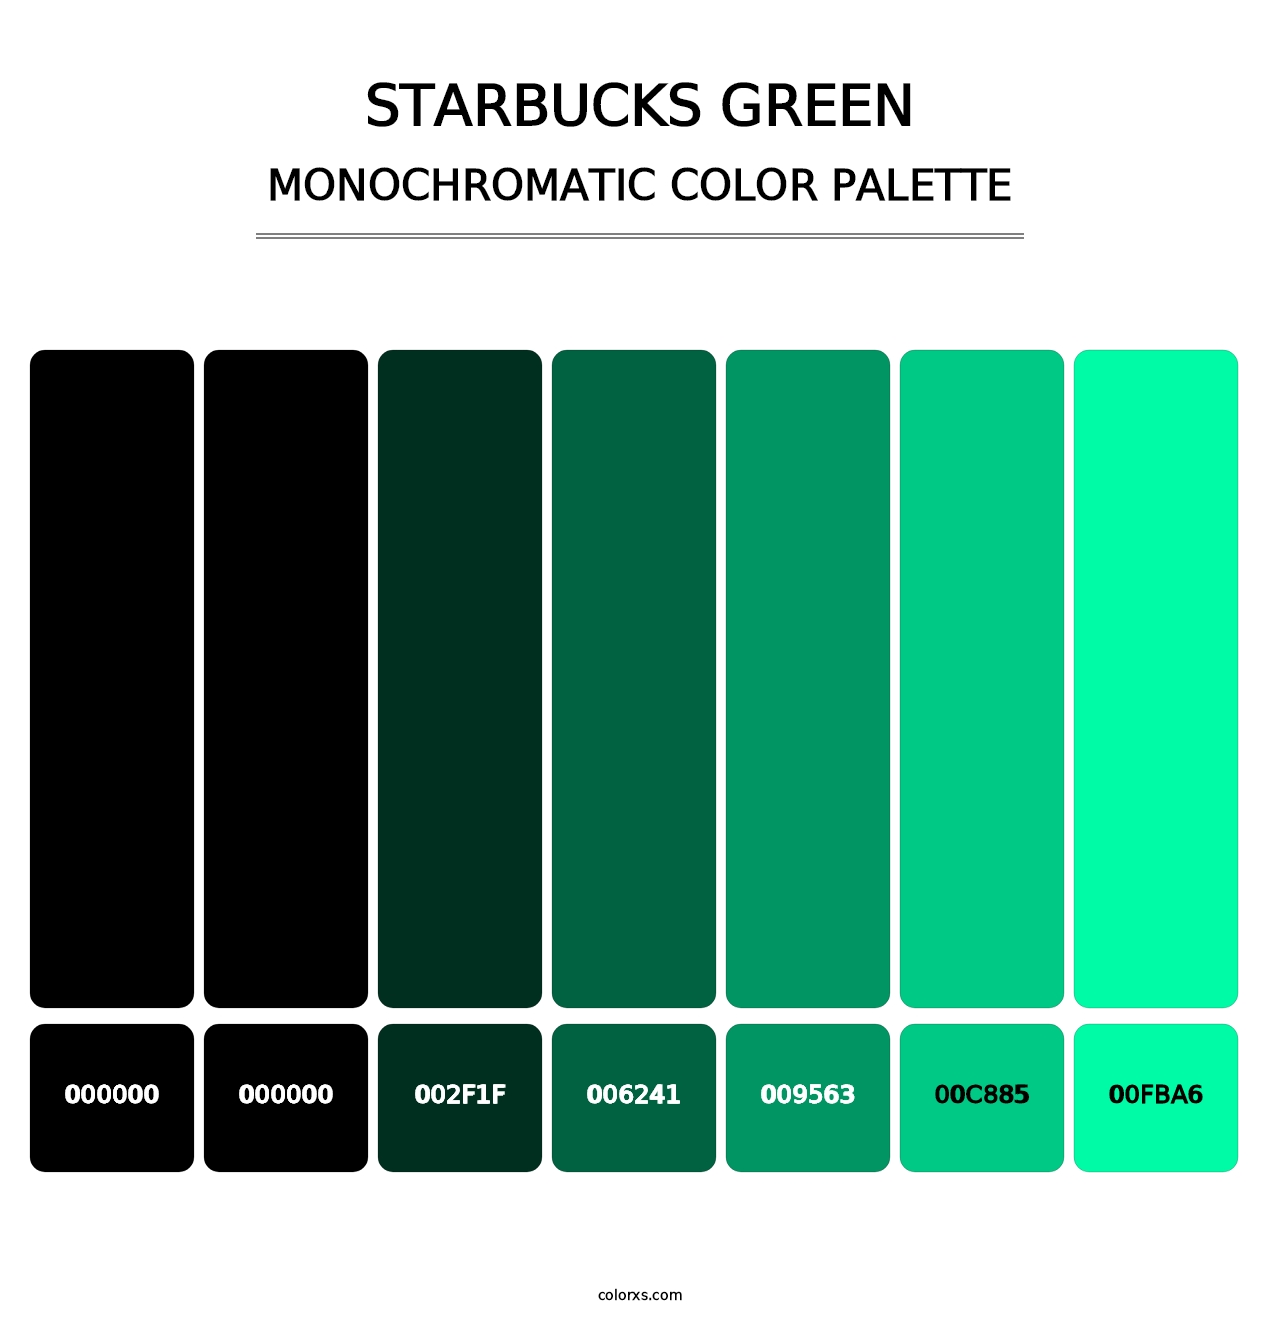 Starbucks Green - Monochromatic Color Palette